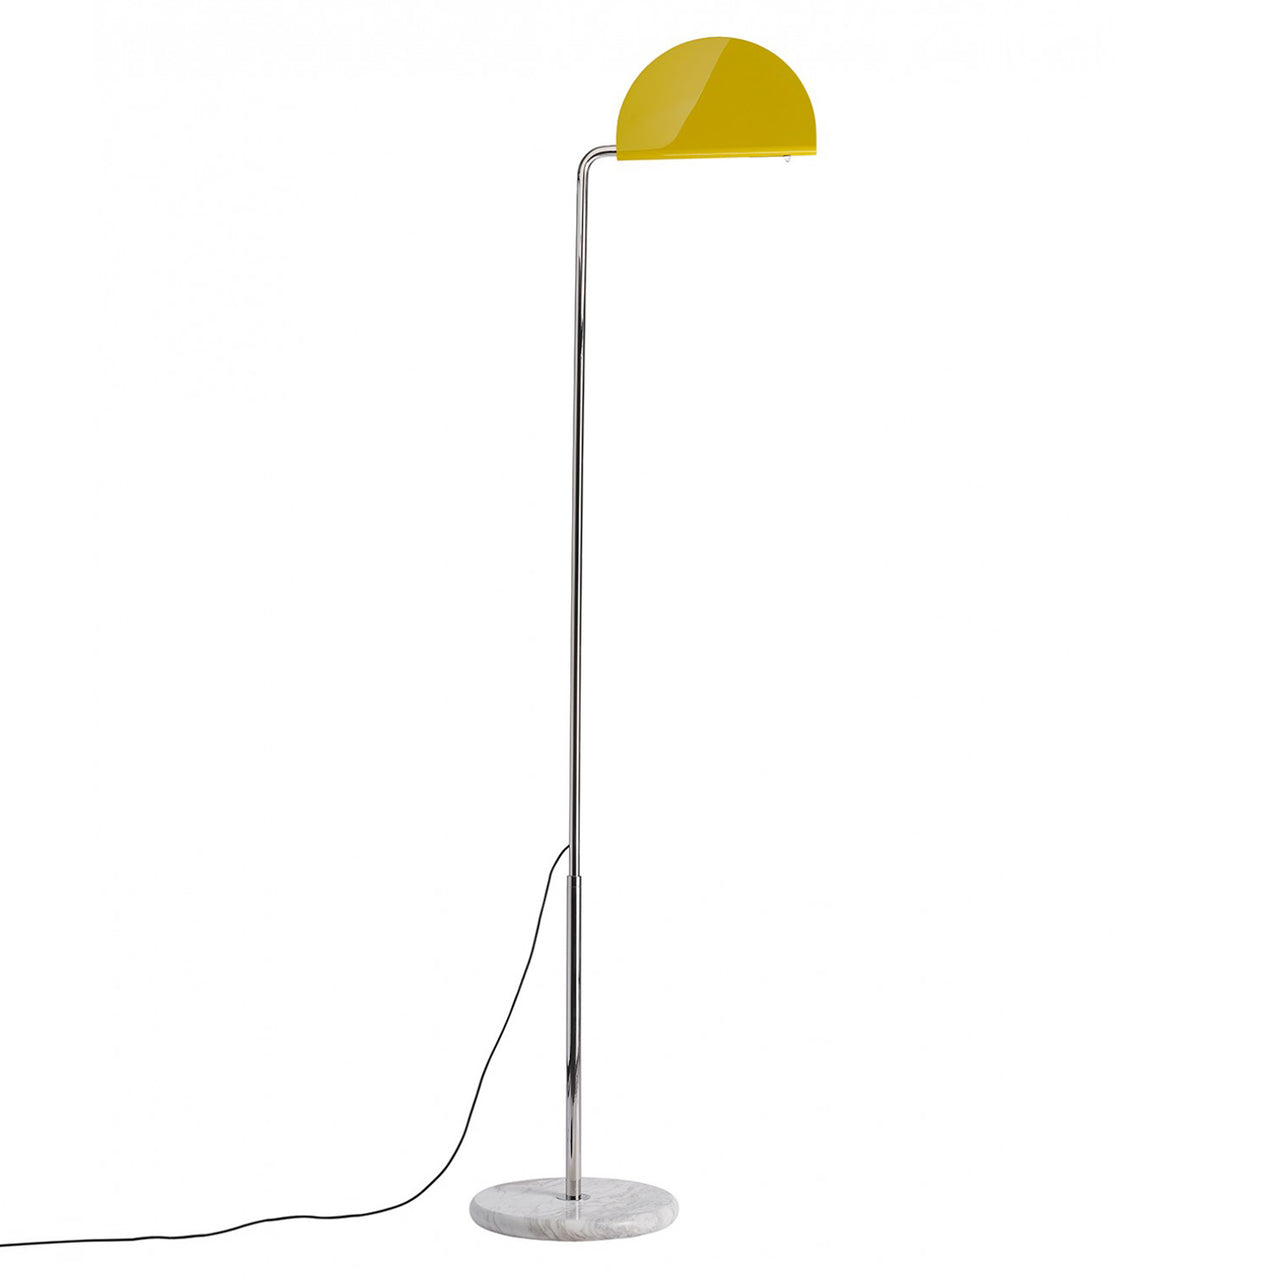 Mezzaluna Floor Lamp: Glossy Yellow